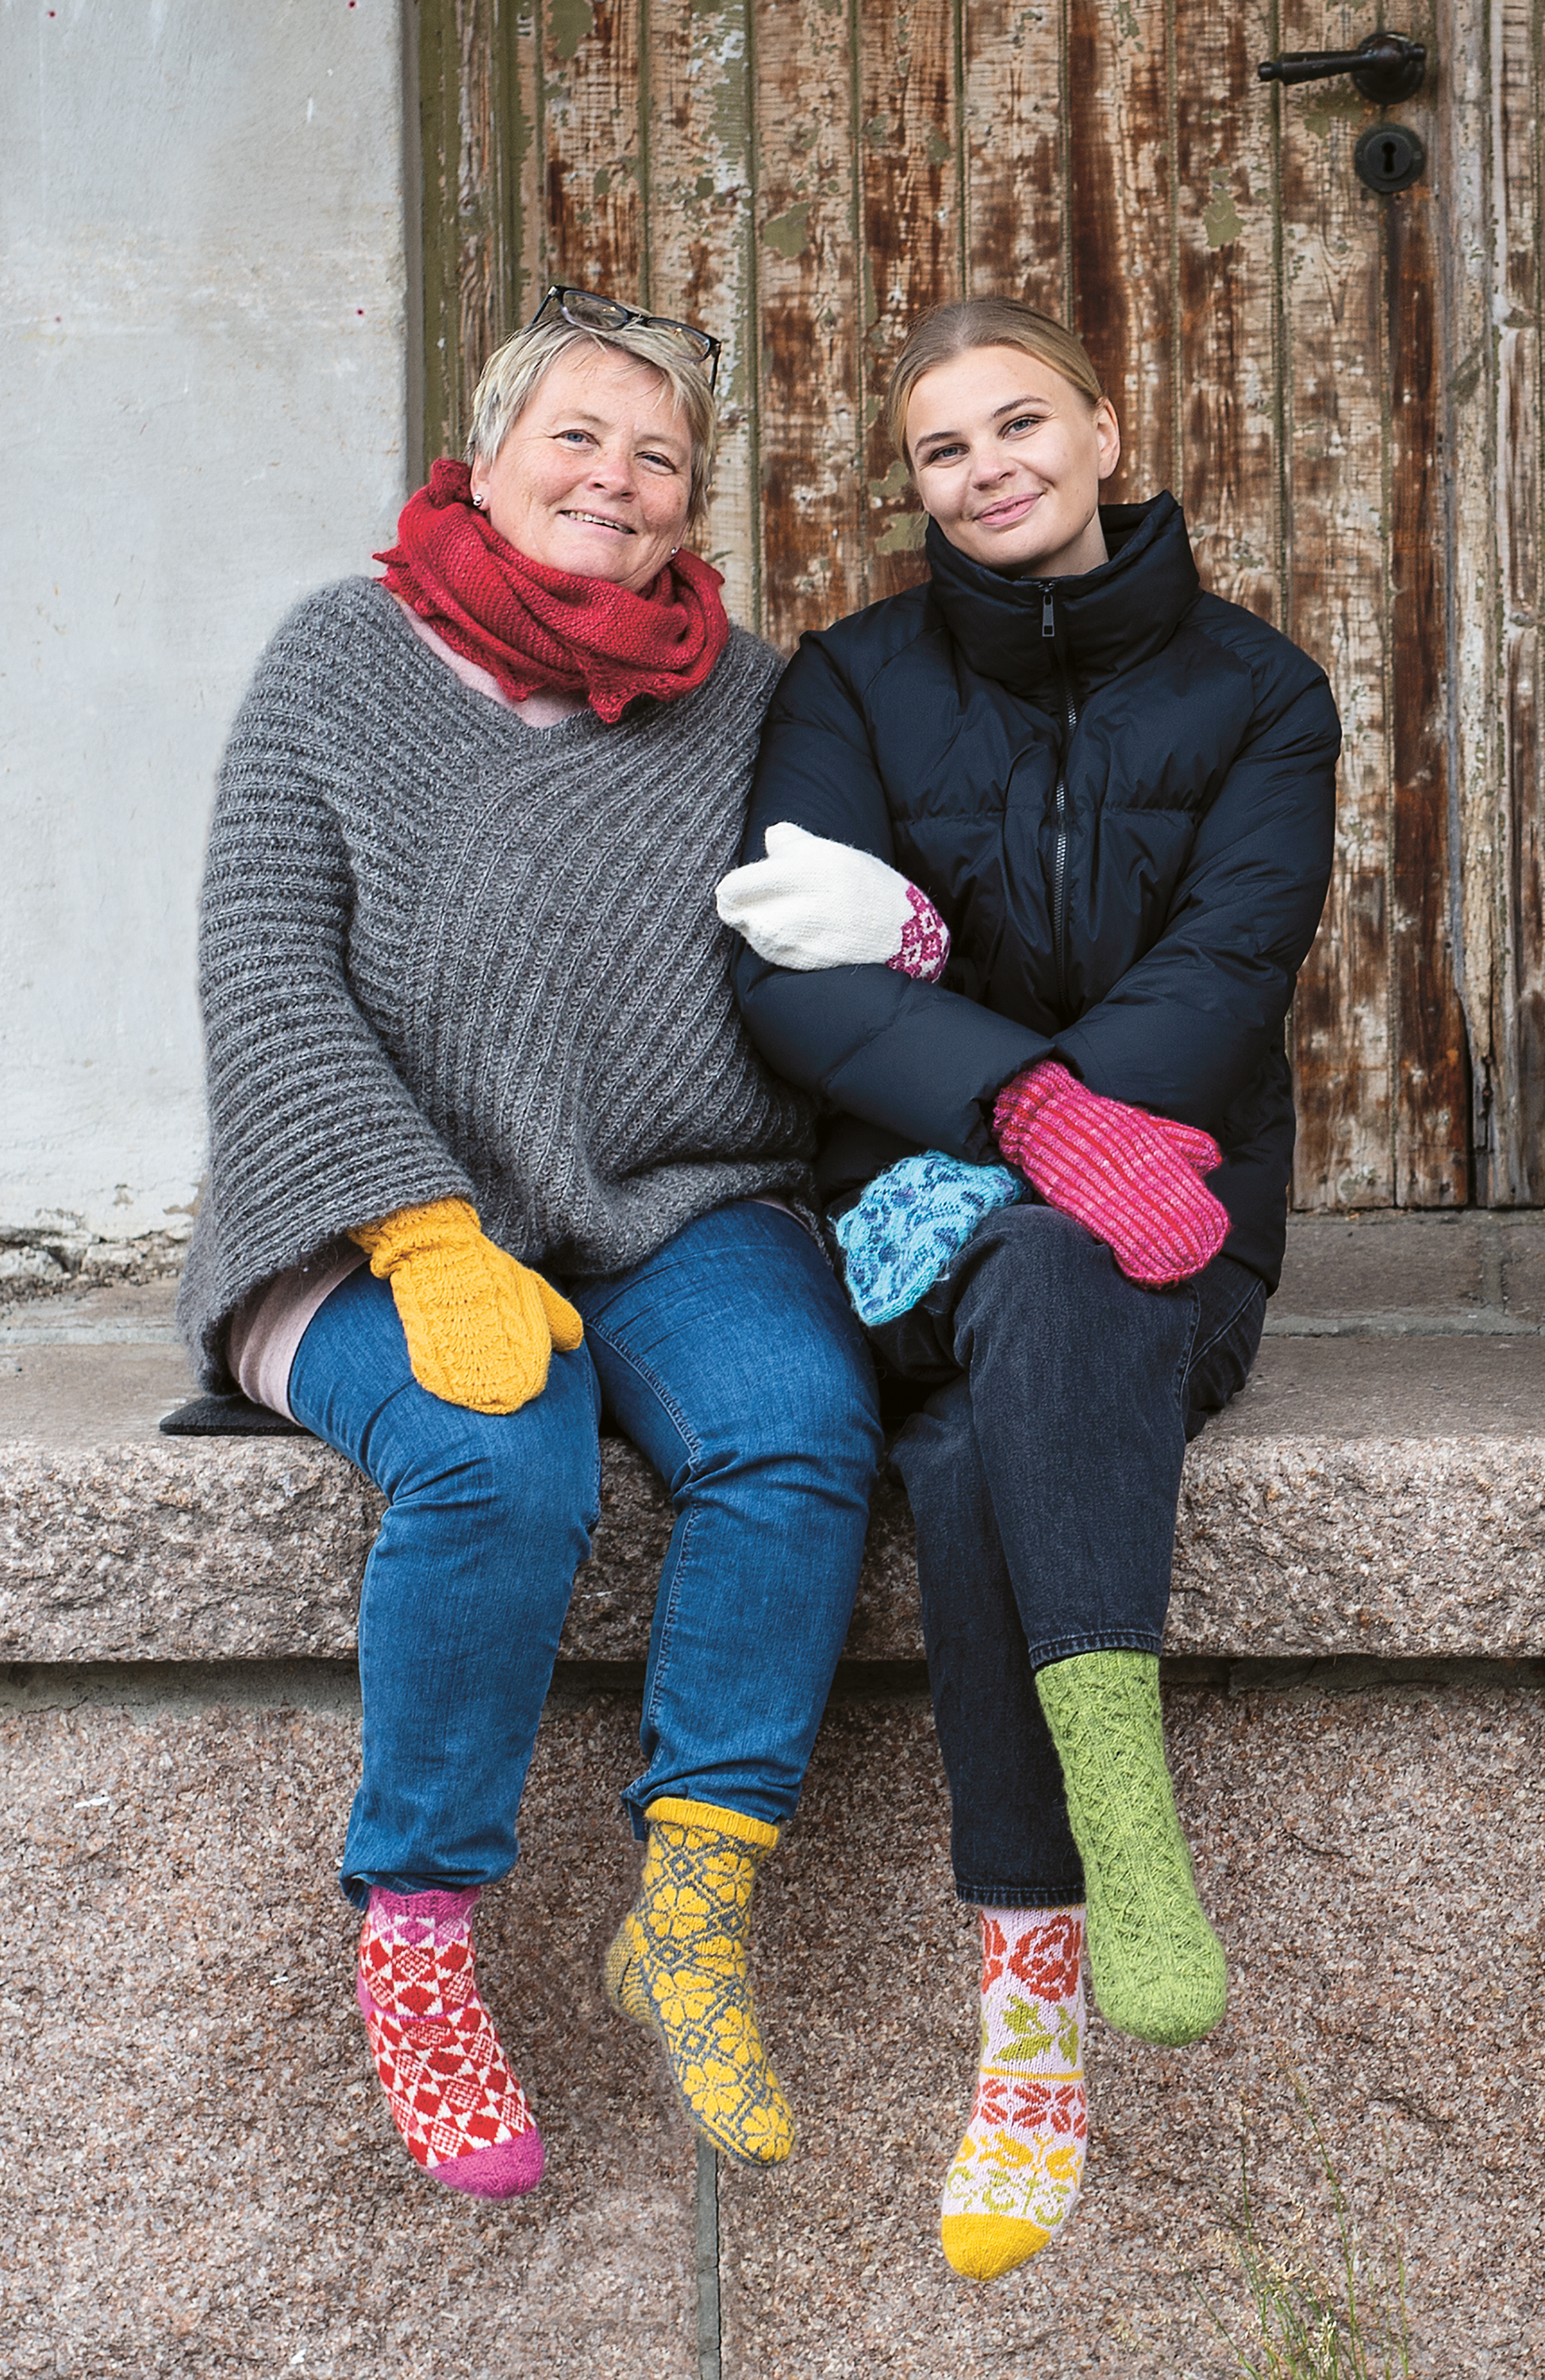 Nina's Favorite Mittens and Socks from Around Norway